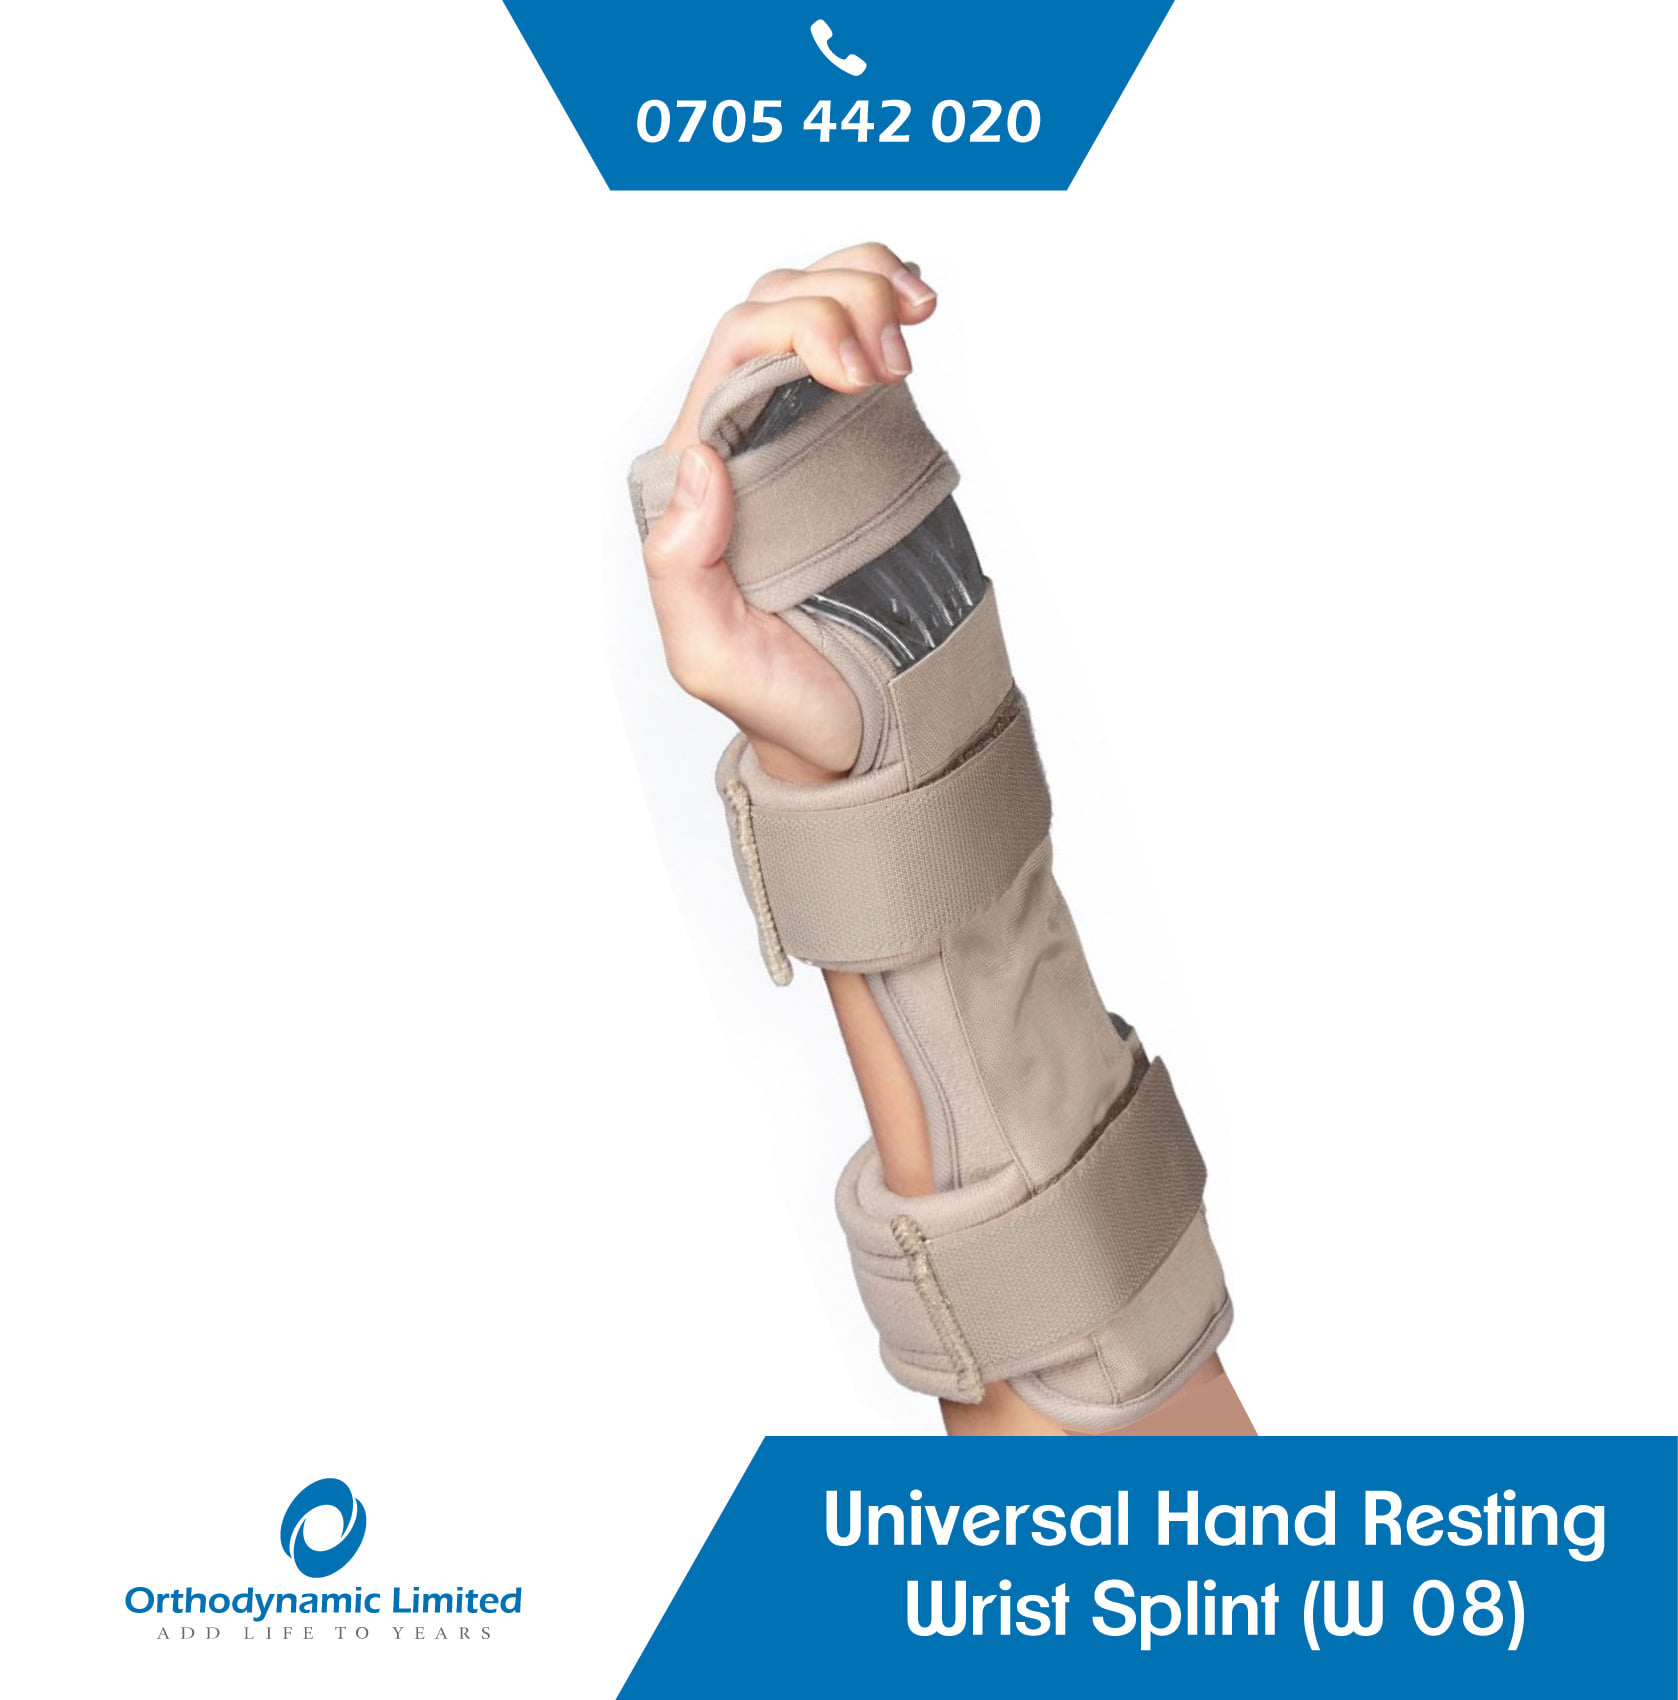 Universal hand wresting splint